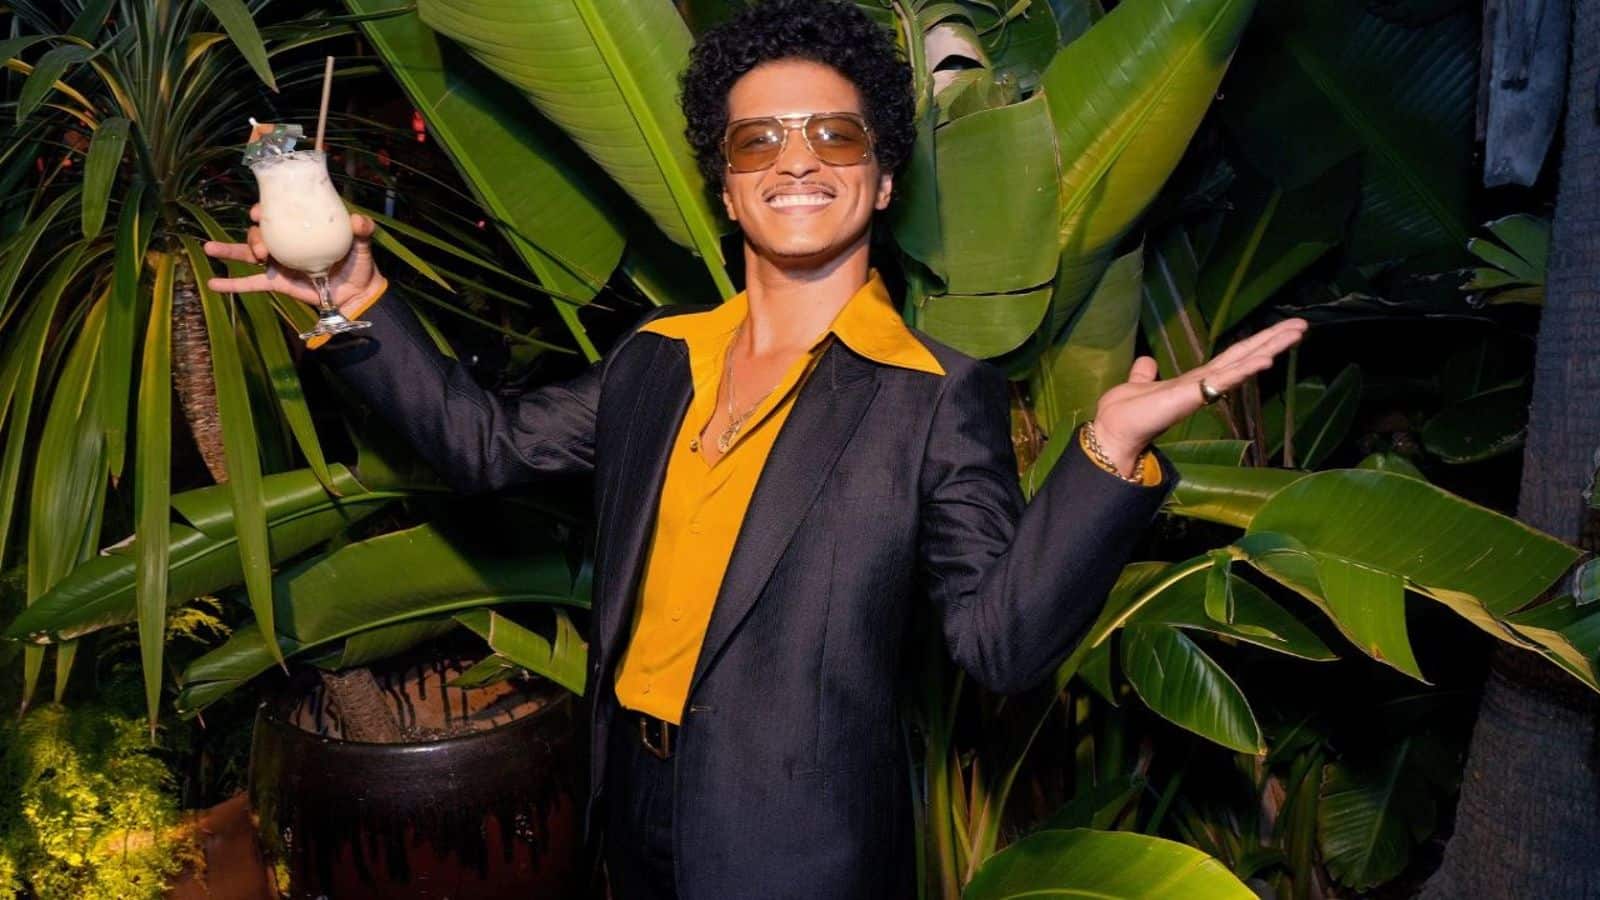 Bruno Mars has 'no' $50M gambling debt with MGM casino